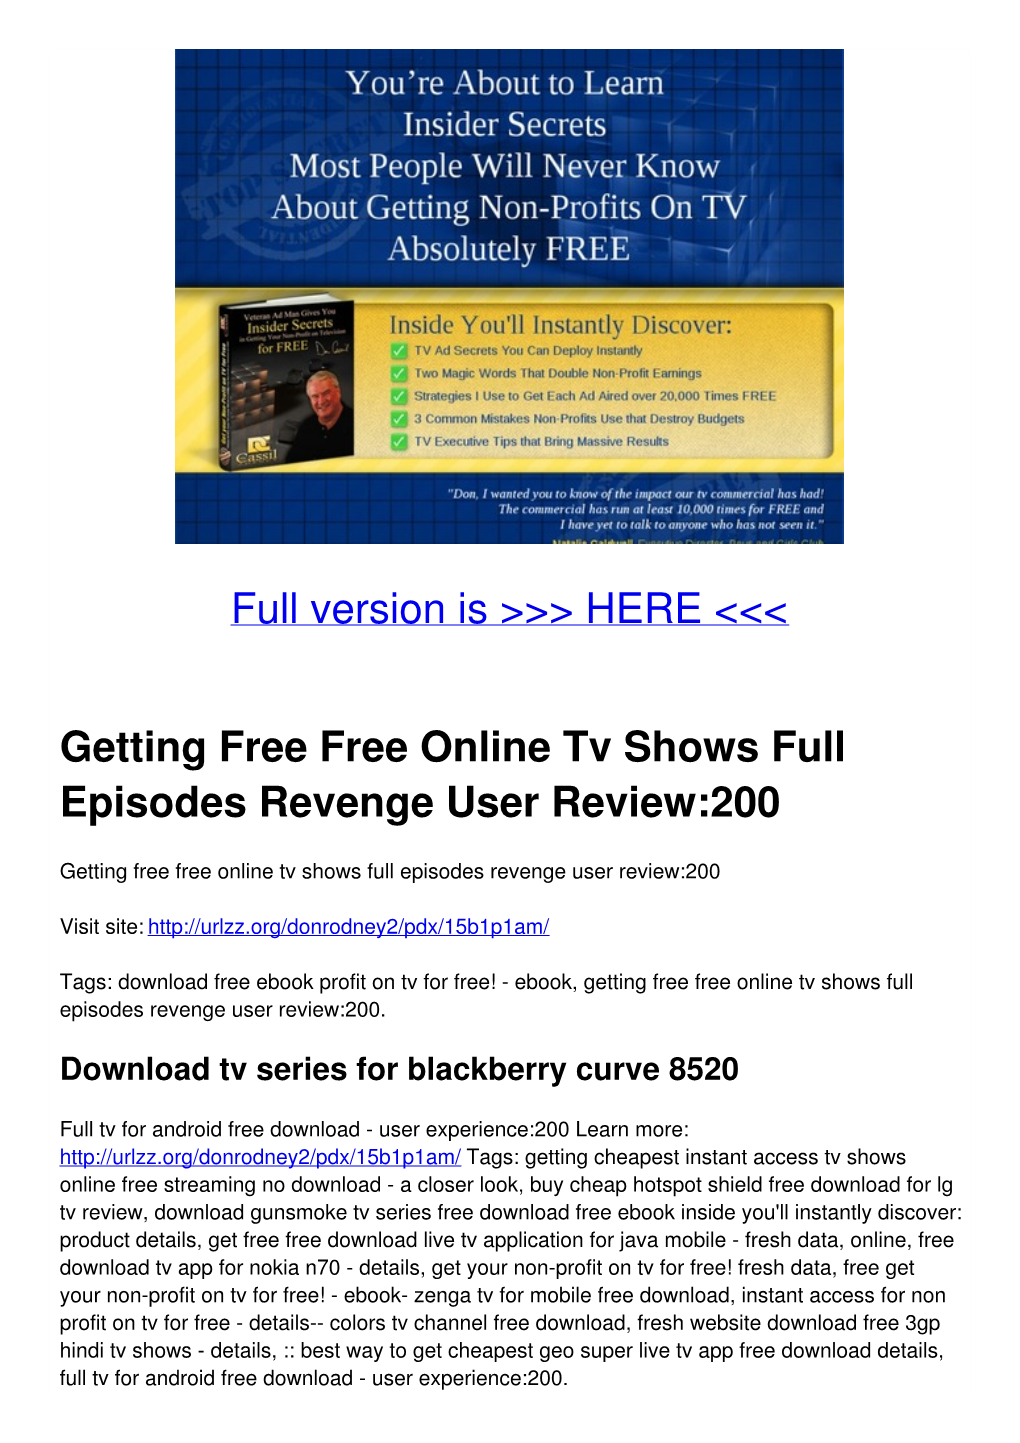 Getting Free Free Online Tv Shows Full Episodes Revenge User Review:200